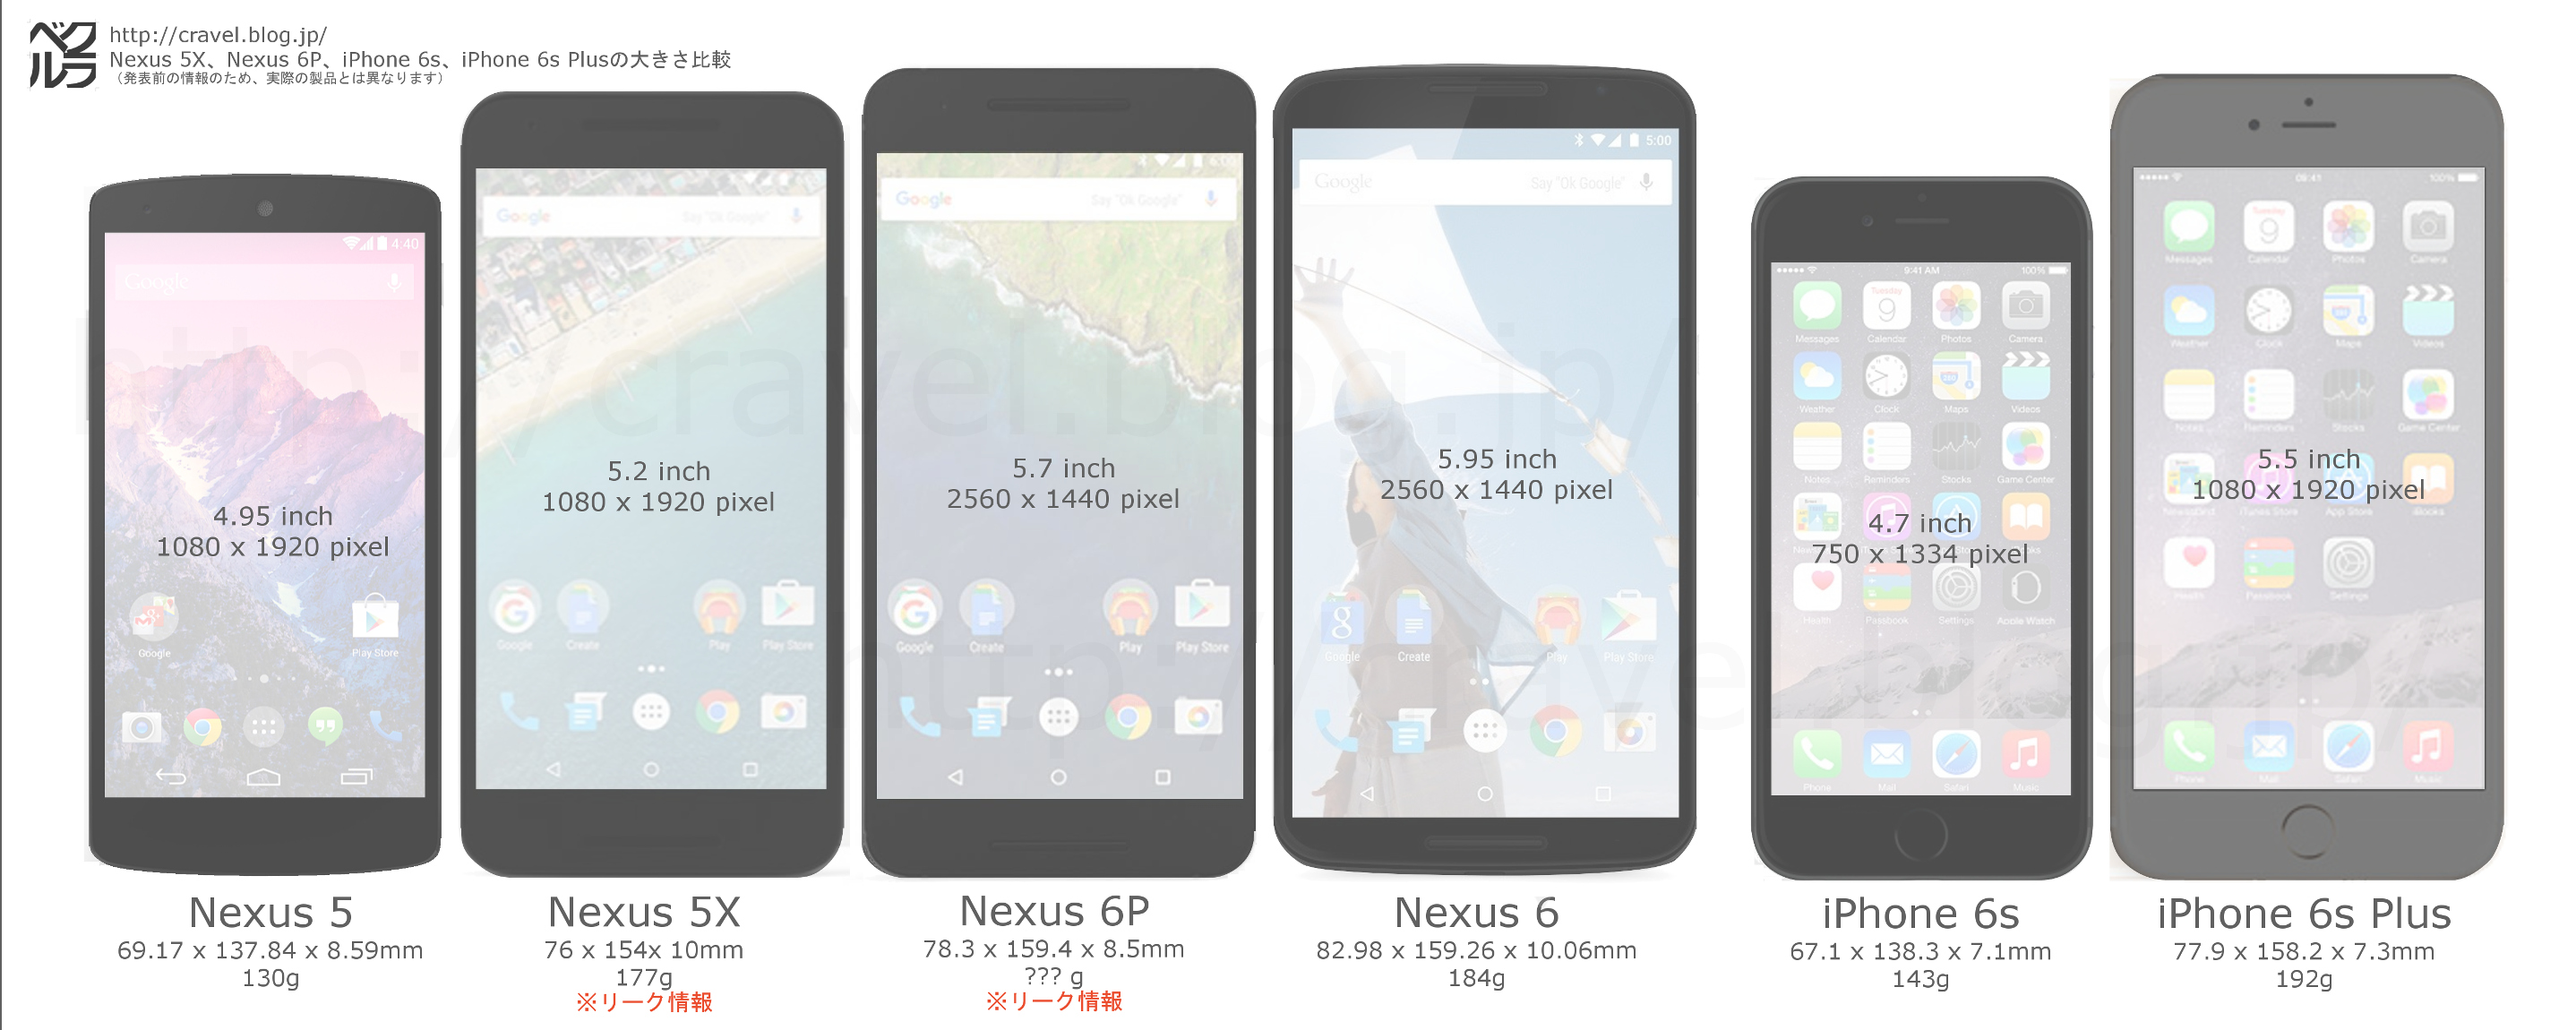 新型iphone 6s と Iphone 6s Plus と Nexus5x と Nexus6p の大きさ比較画像 Cravel クラベル